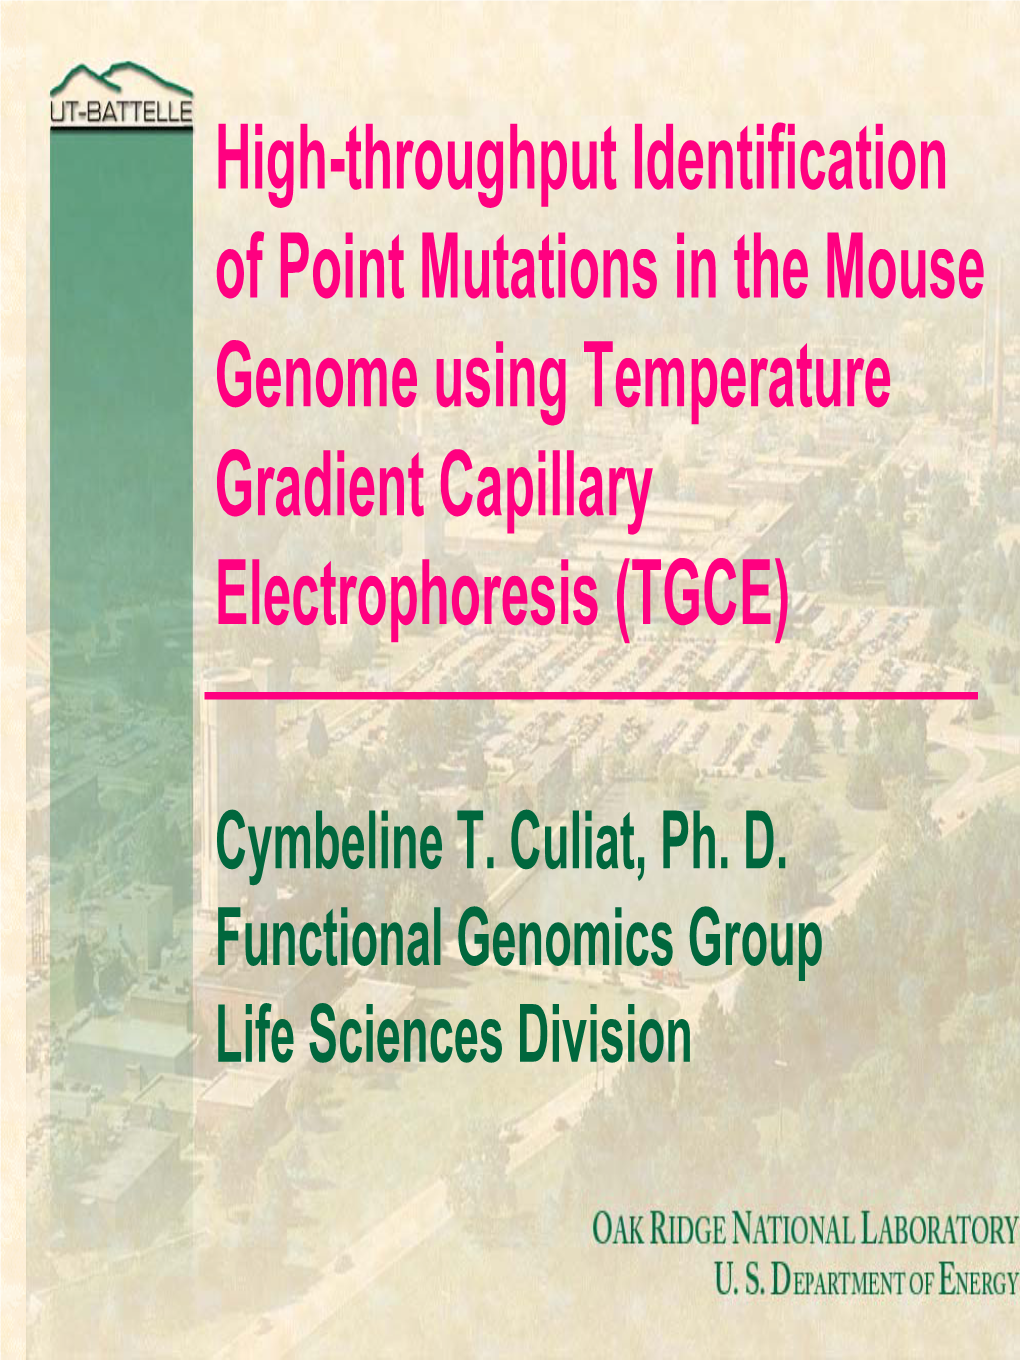 Cymbeline T. Culiat, Ph. D. Functional Genomics Group Life Sciences Division